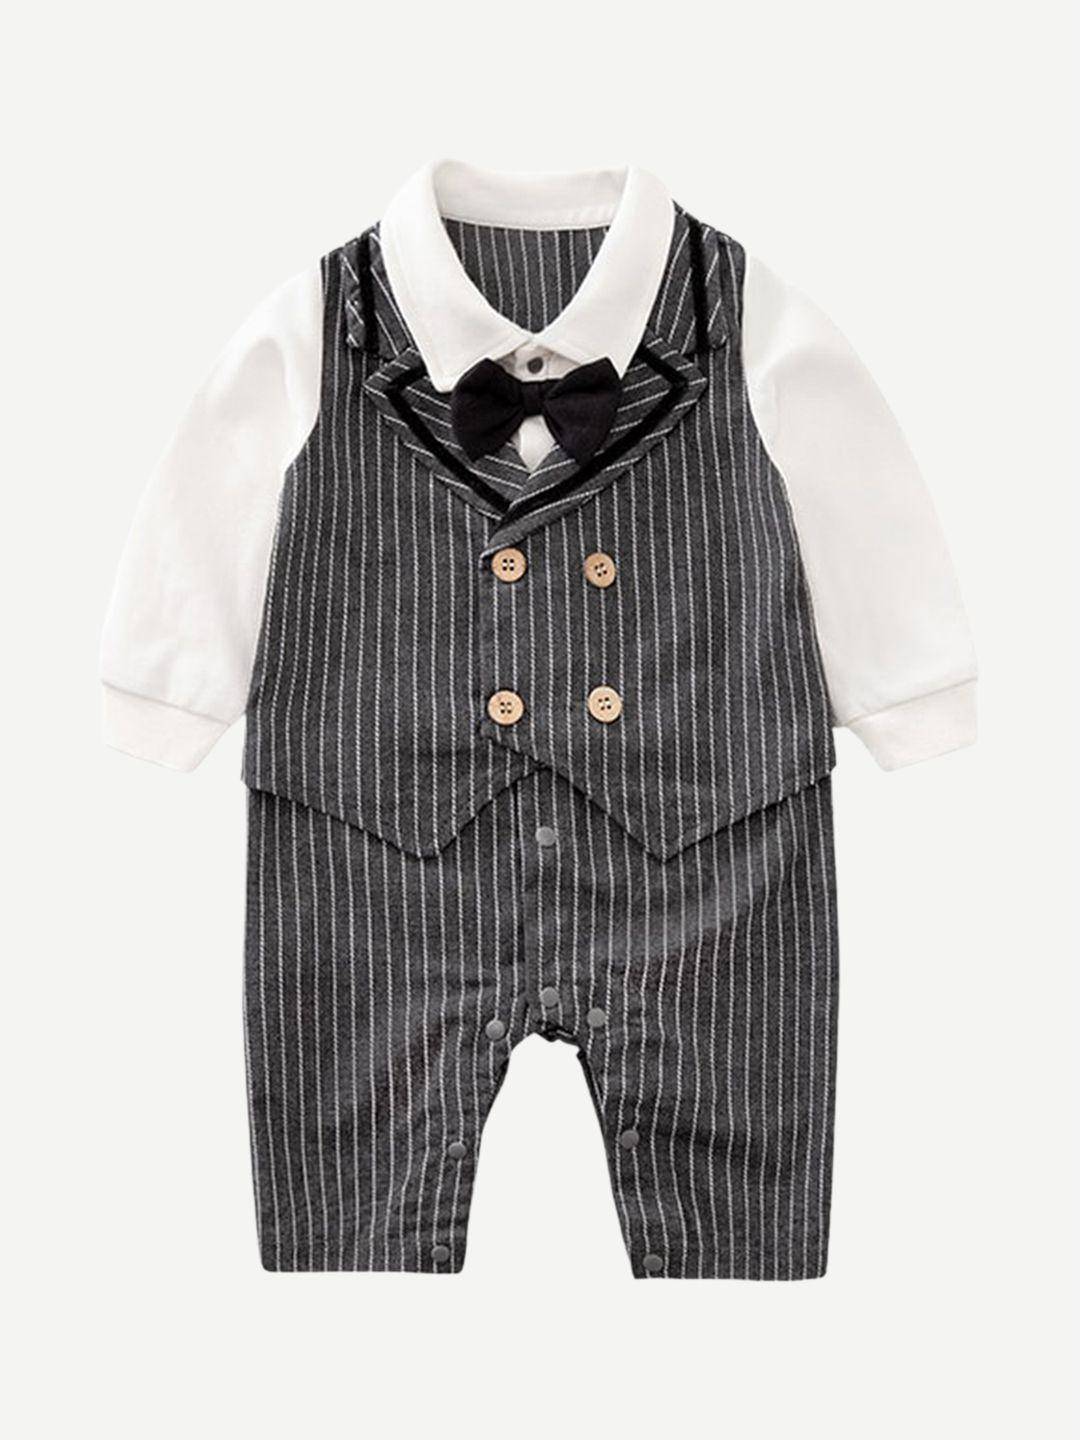 stylecast-infant-boys-black-stripes-cotton-rompers